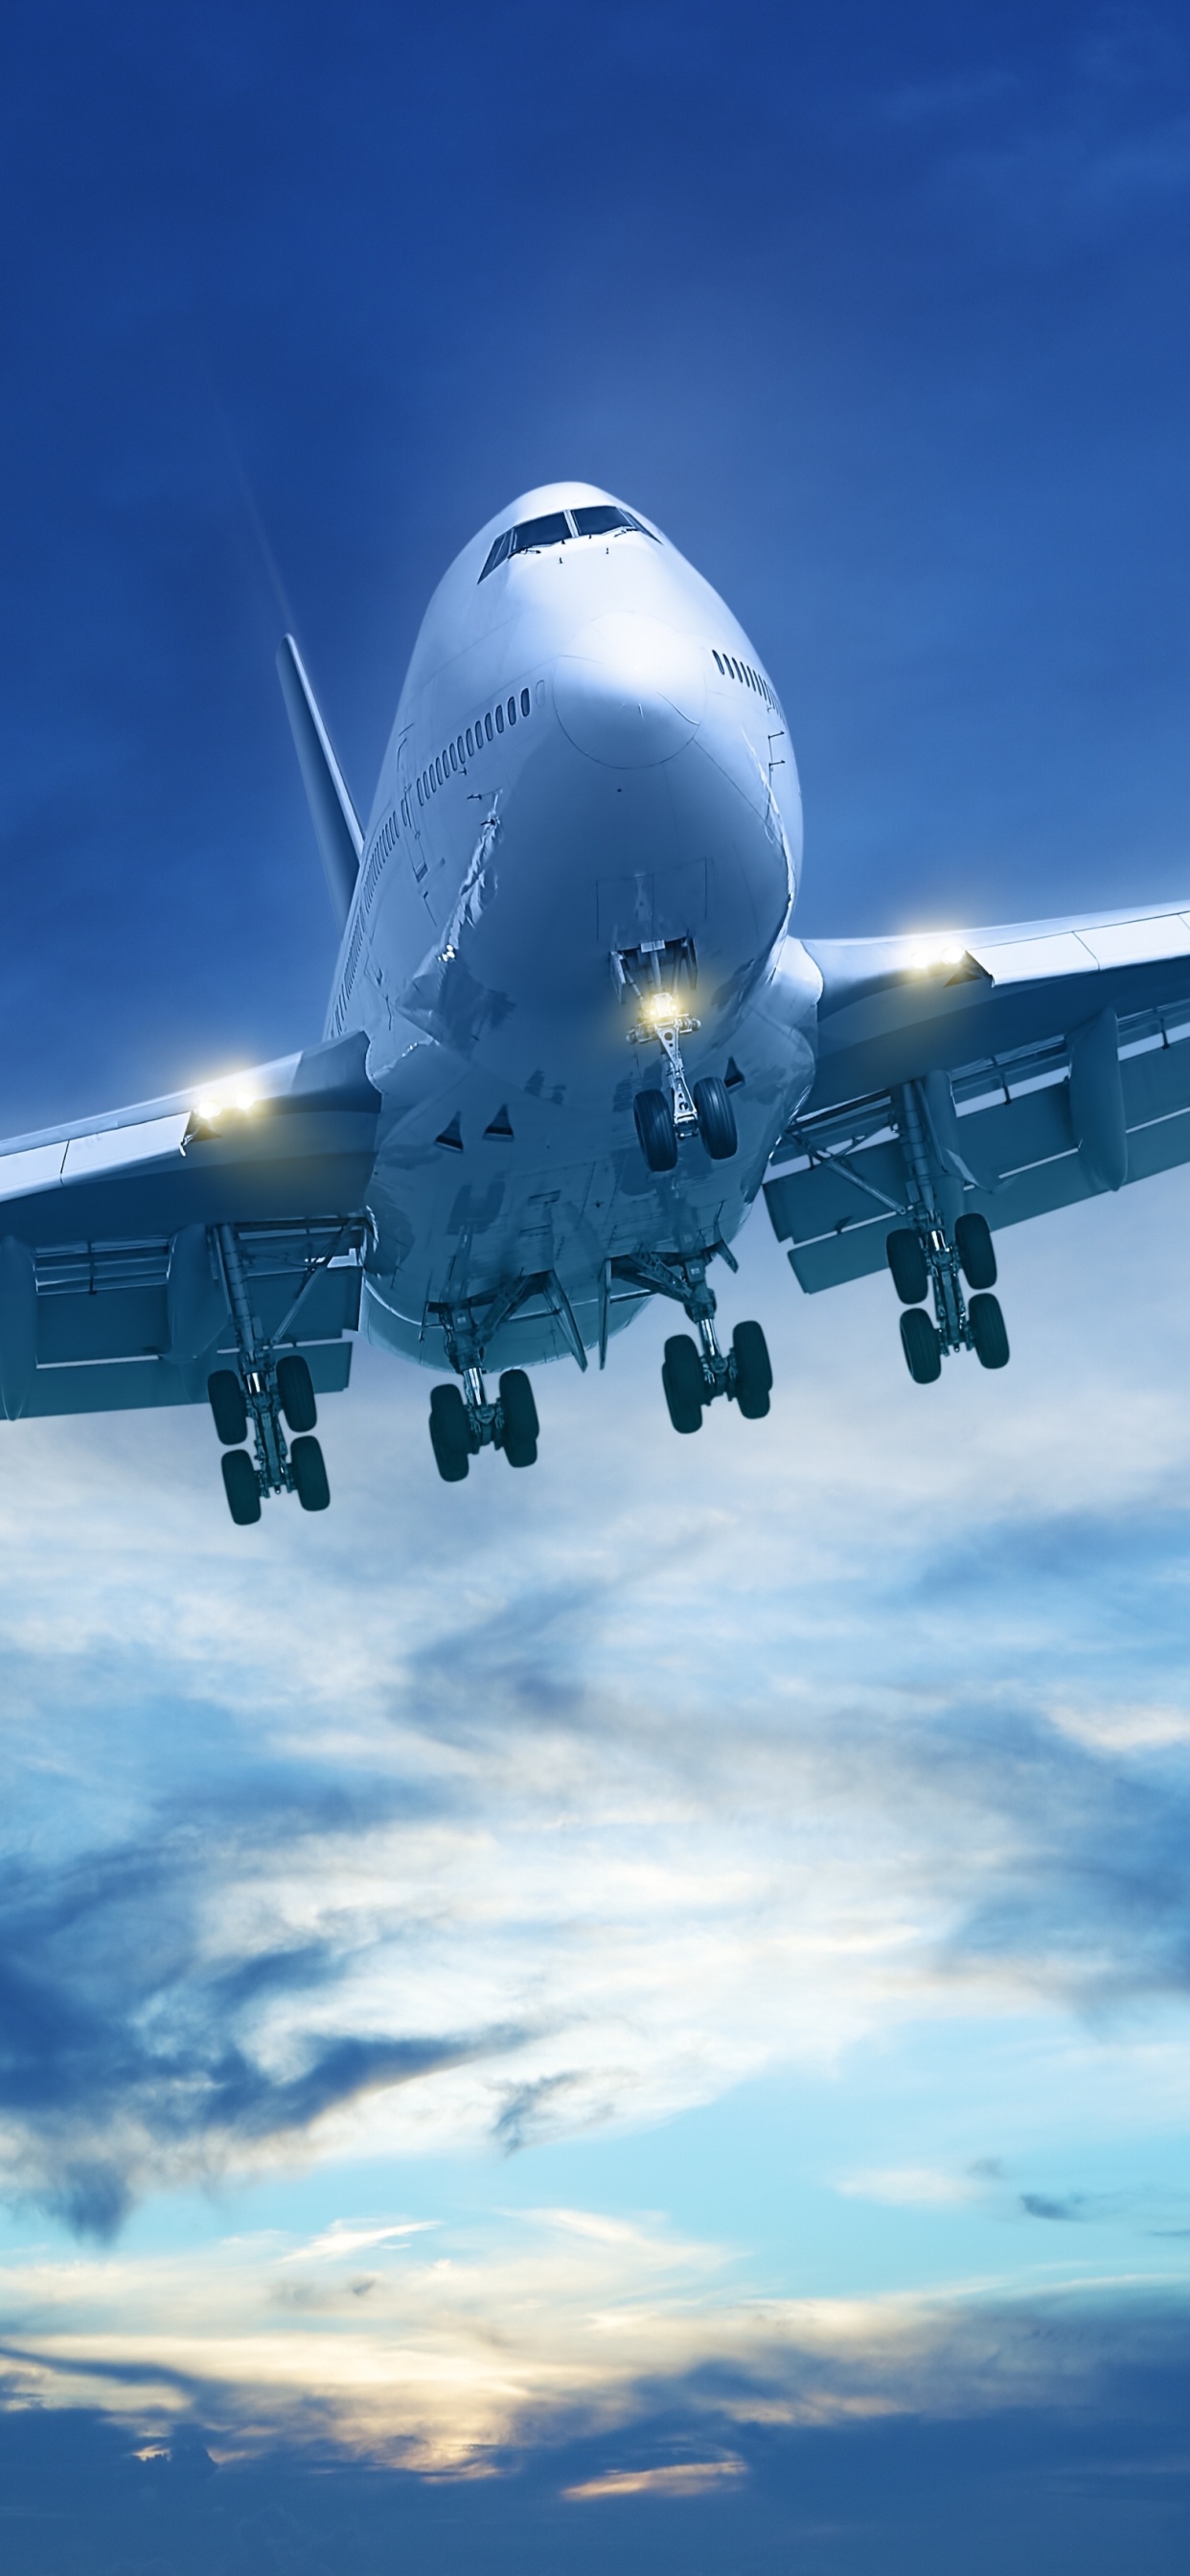 White Airplane Under Blue Sky During Daytime. Wallpaper in 1242x2688 Resolution